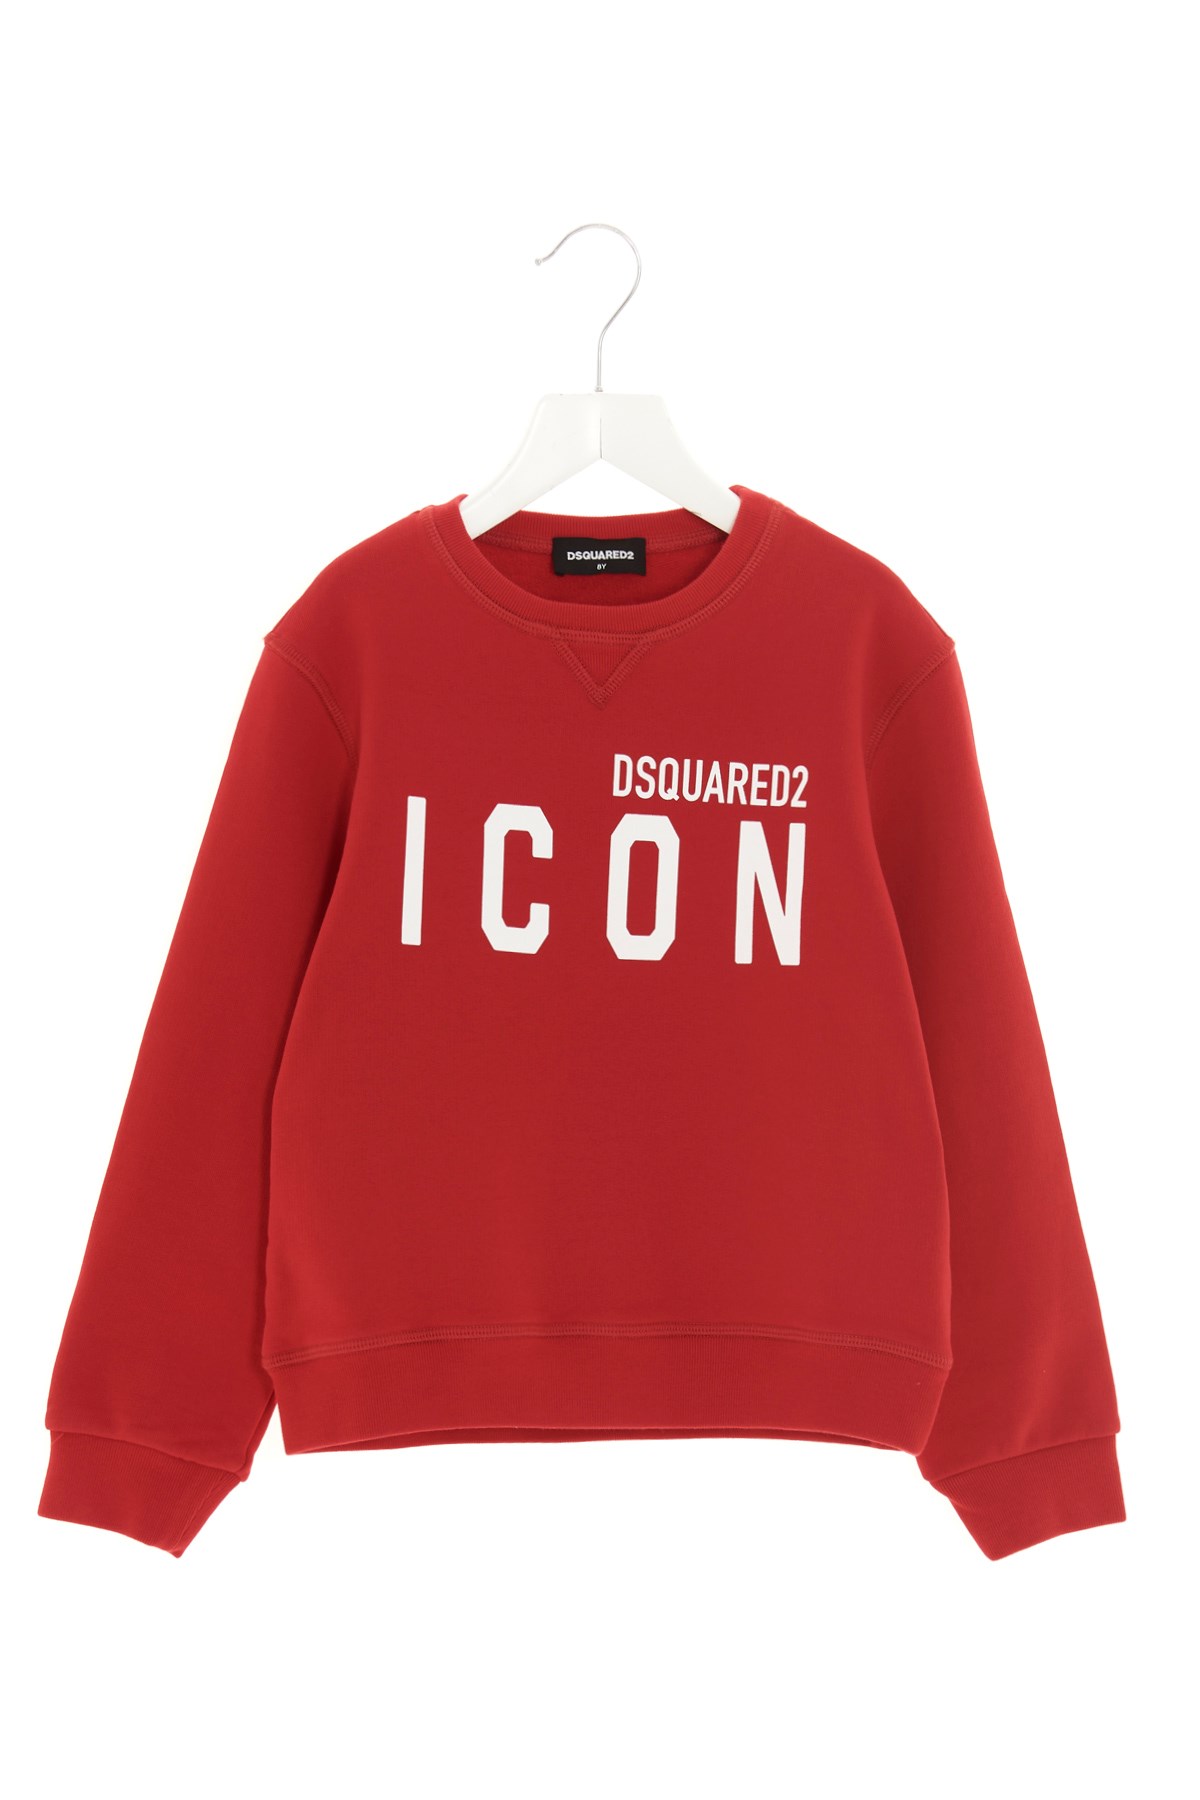 DSQUARED2 'Icon’ Sweatshirt